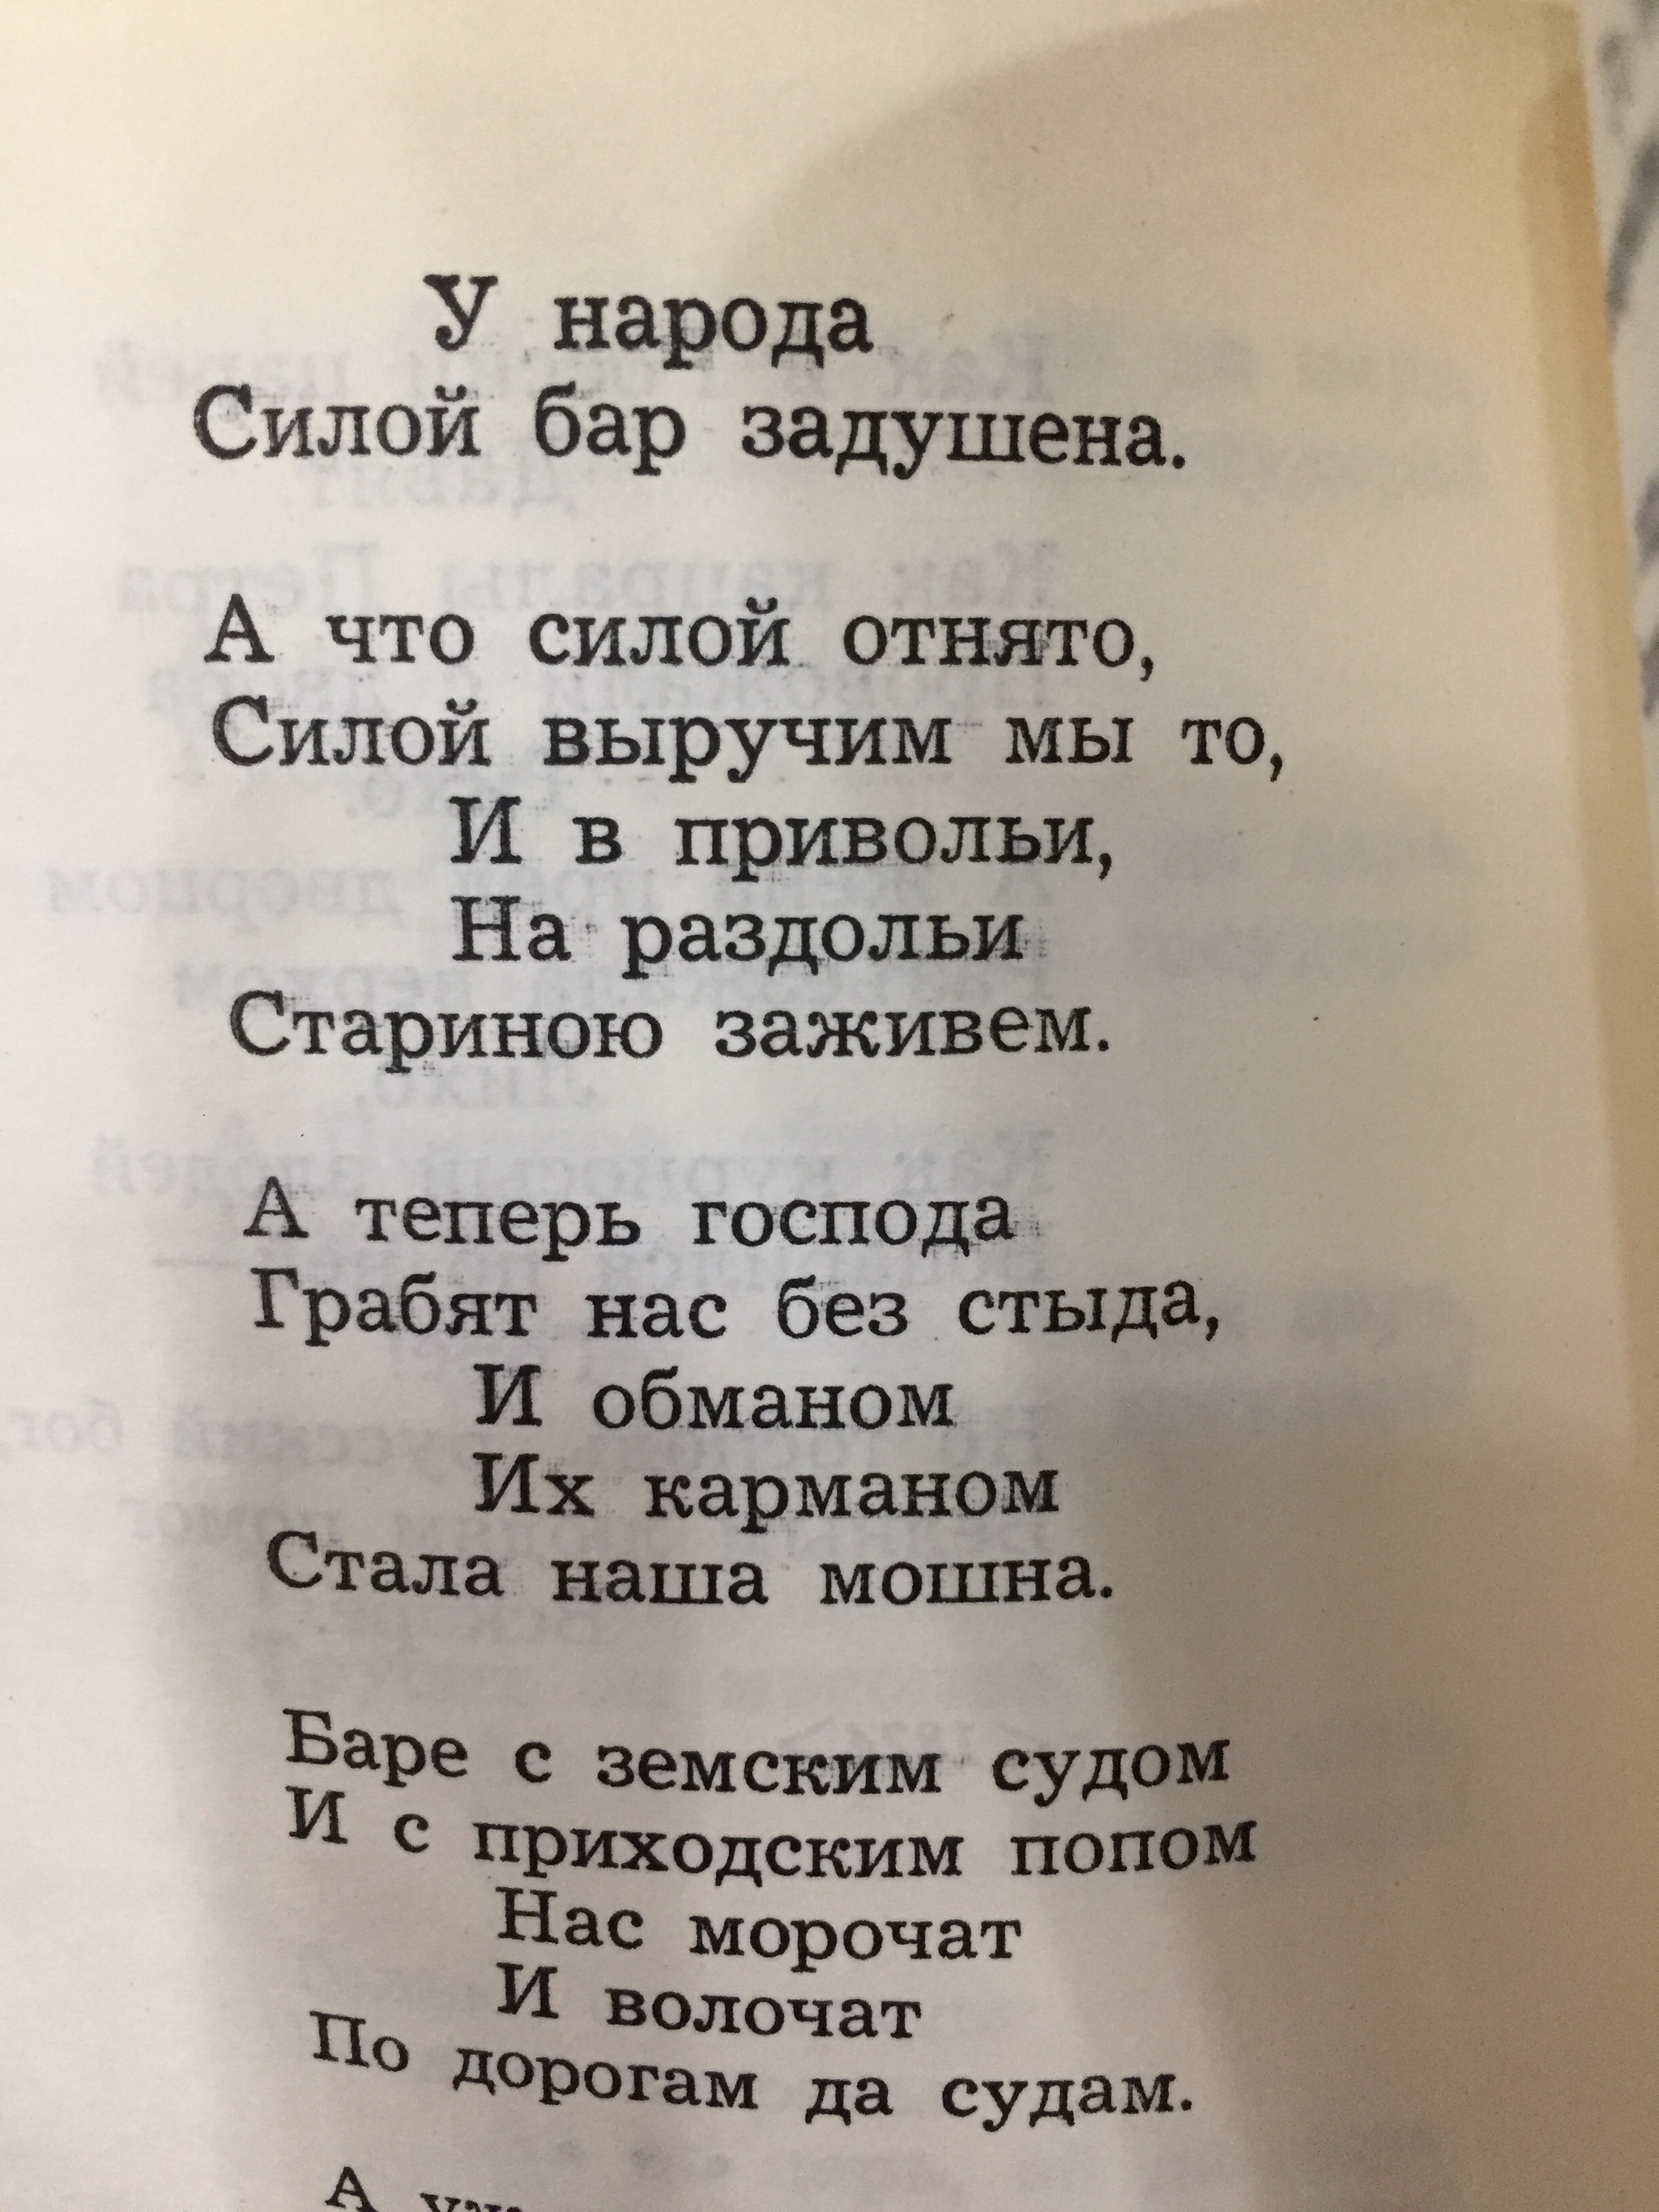 Current... - Poetry, Politics, People of Russia, Democracy, Longpost